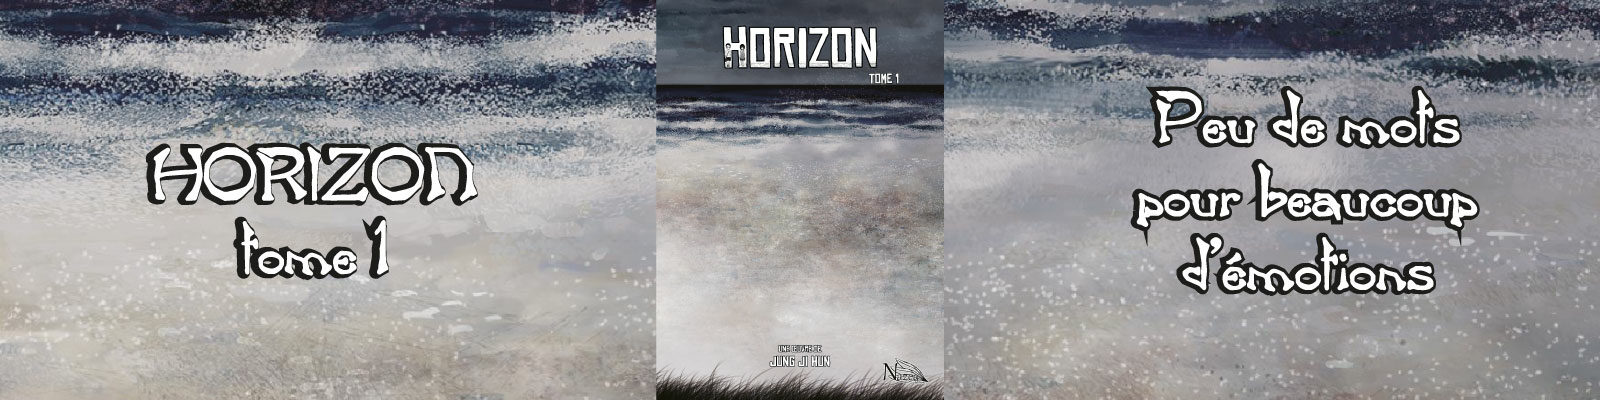 Horizon-Vol.1-2